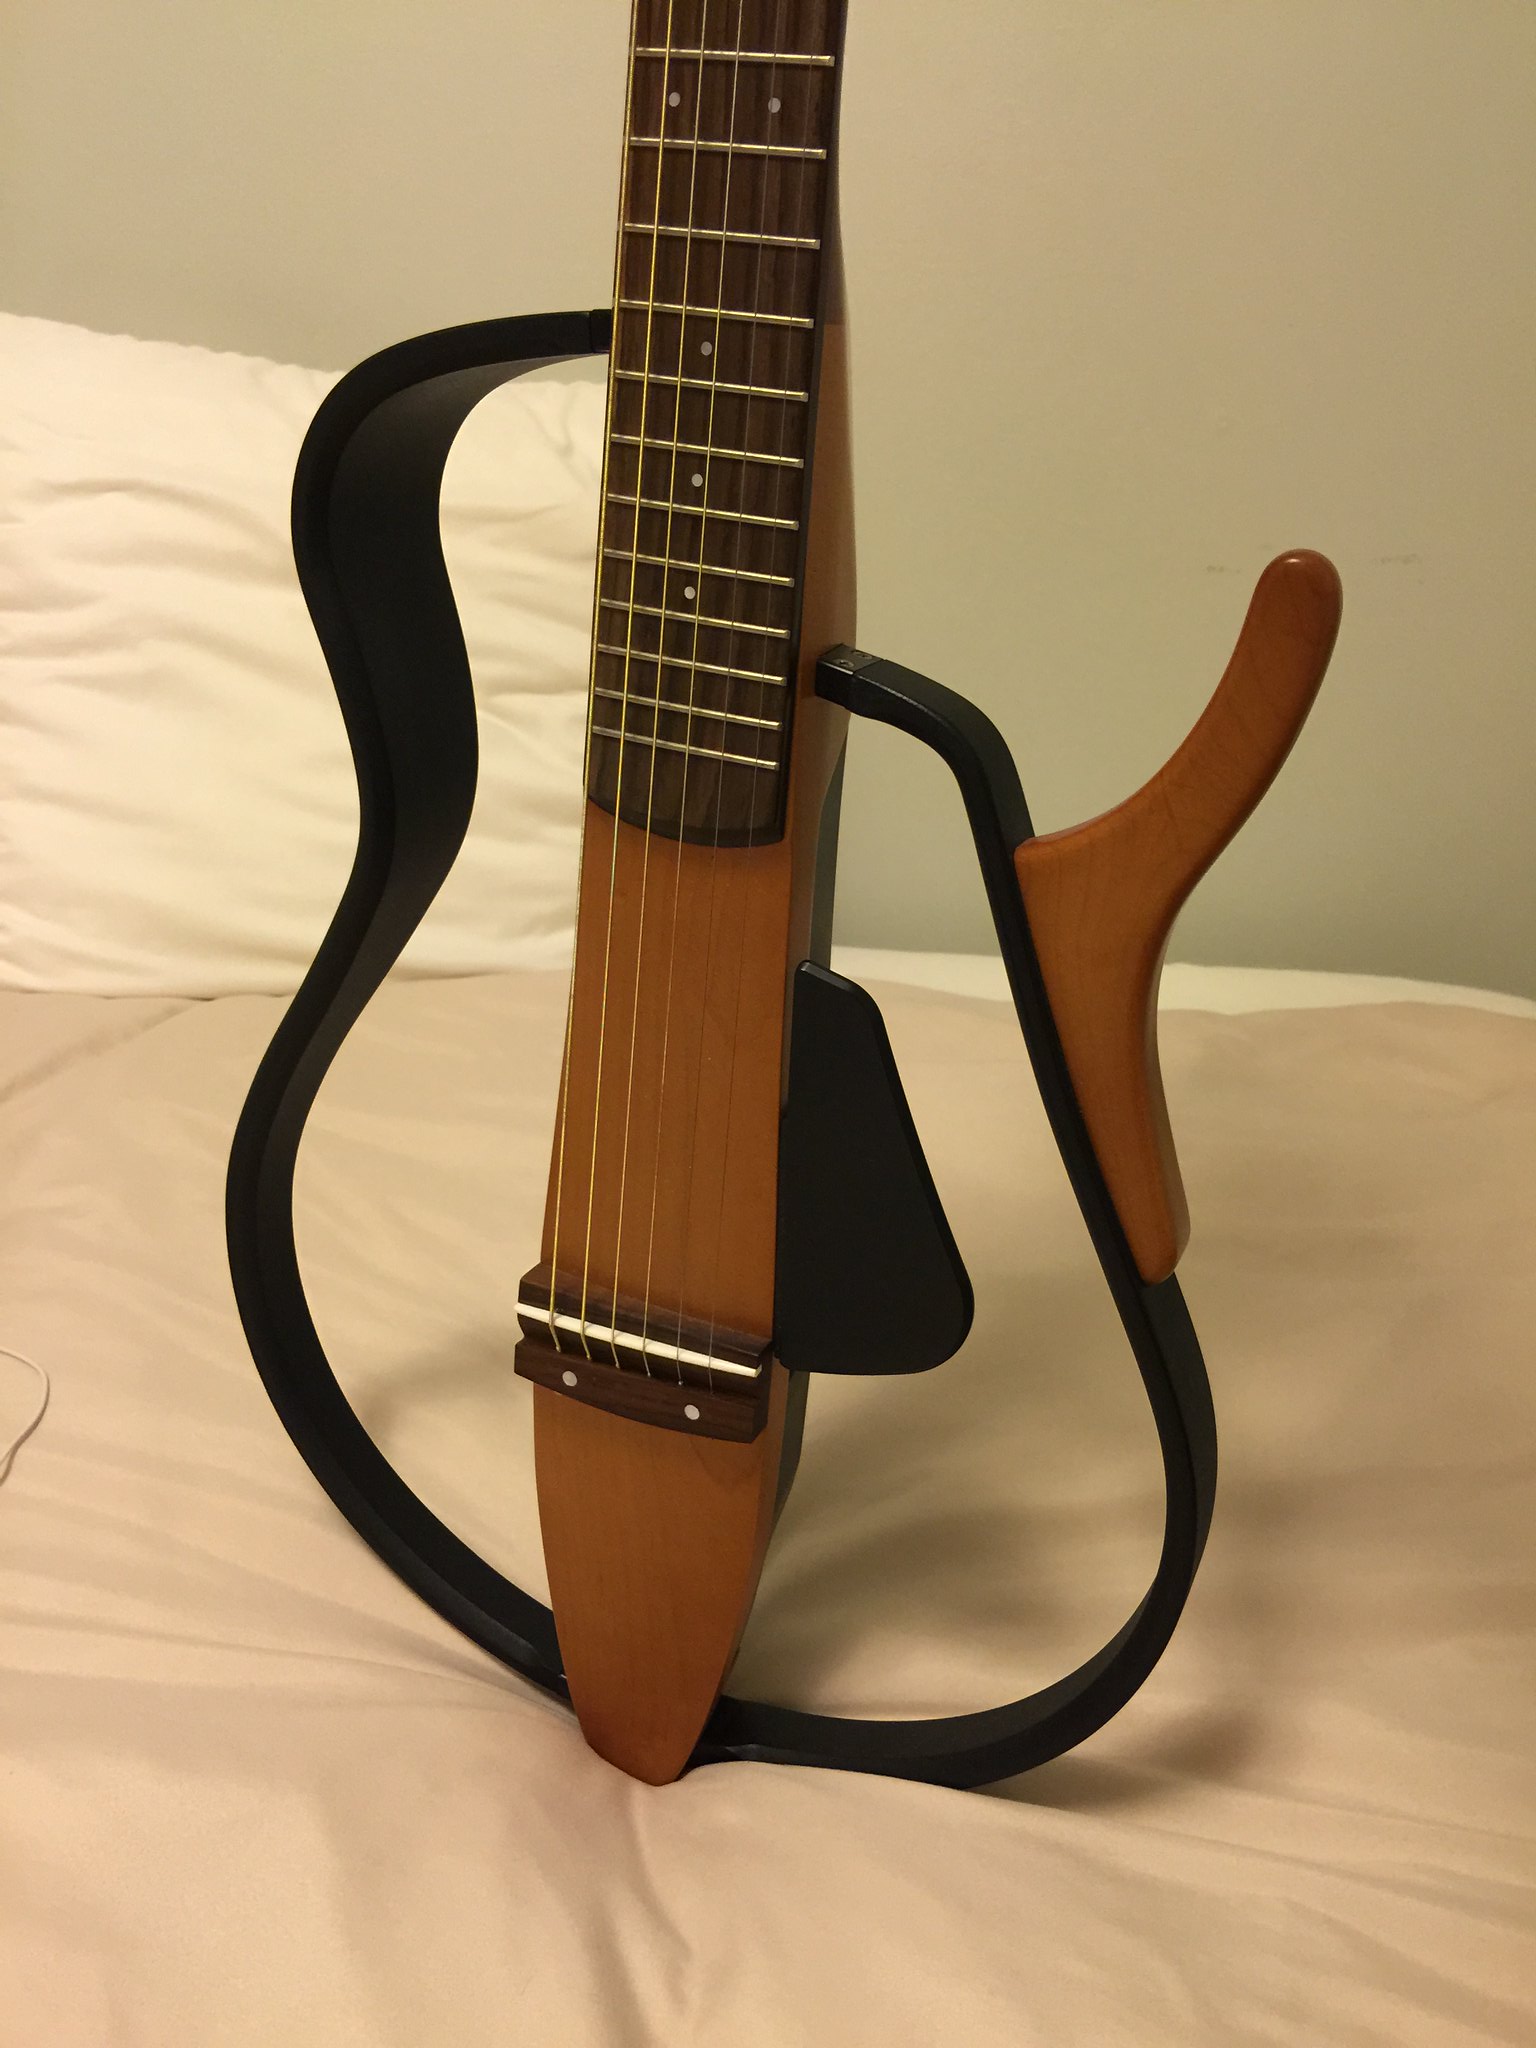 NGD - Yamaha SLG-110S Silent Guitar - The Acoustic Guitar Forum